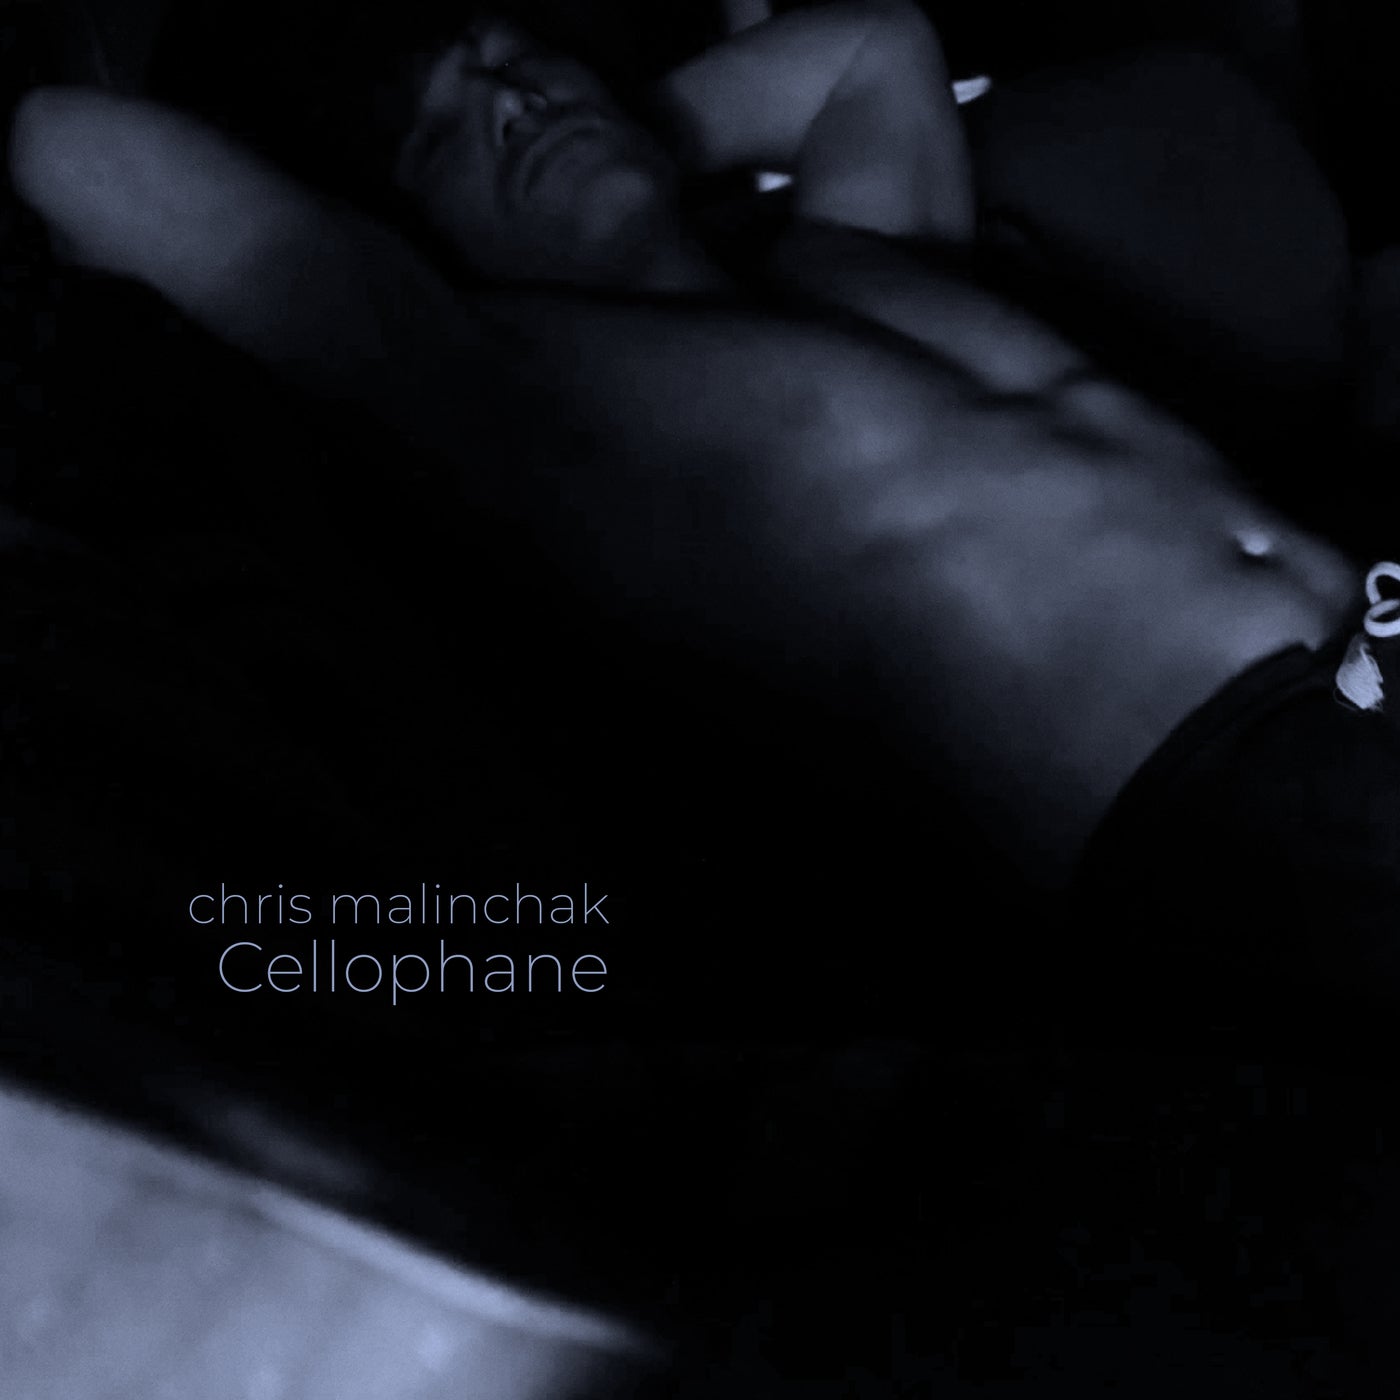 Chris Malinchak - Cellophane [UL02572]